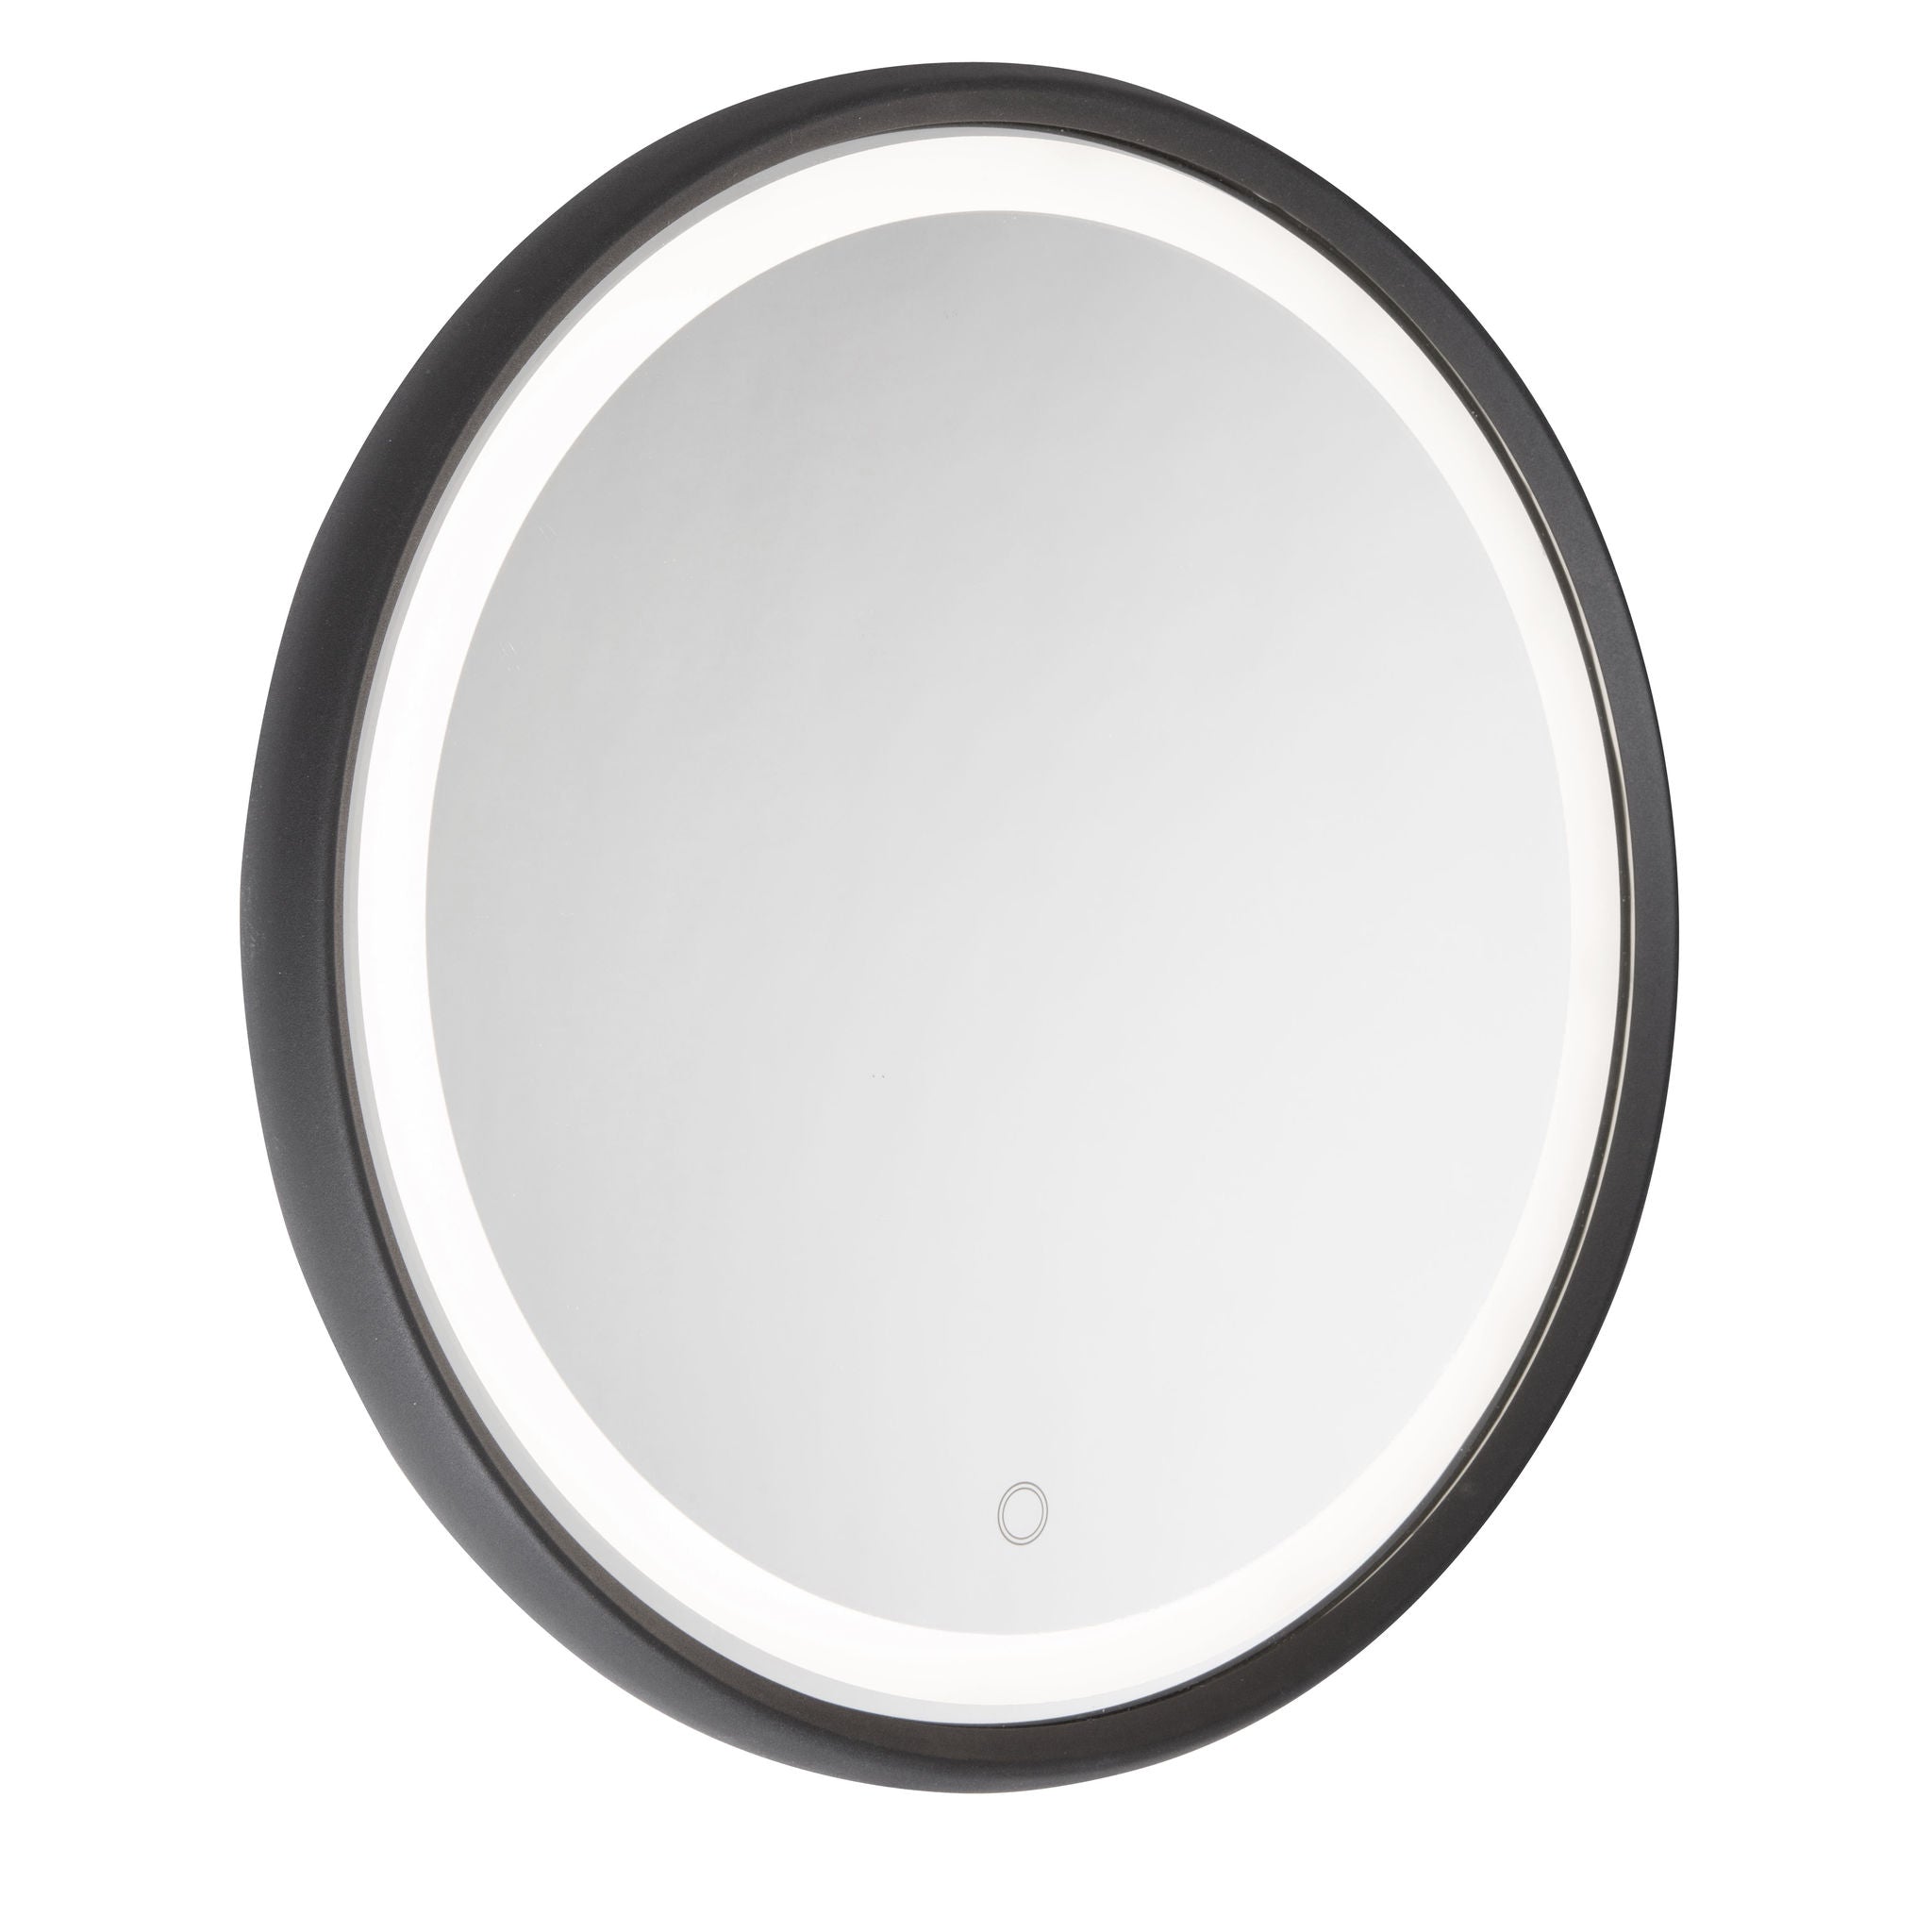 Reflections Mirror Black INTEGRATED LED - AM316 | ARTCRAFT